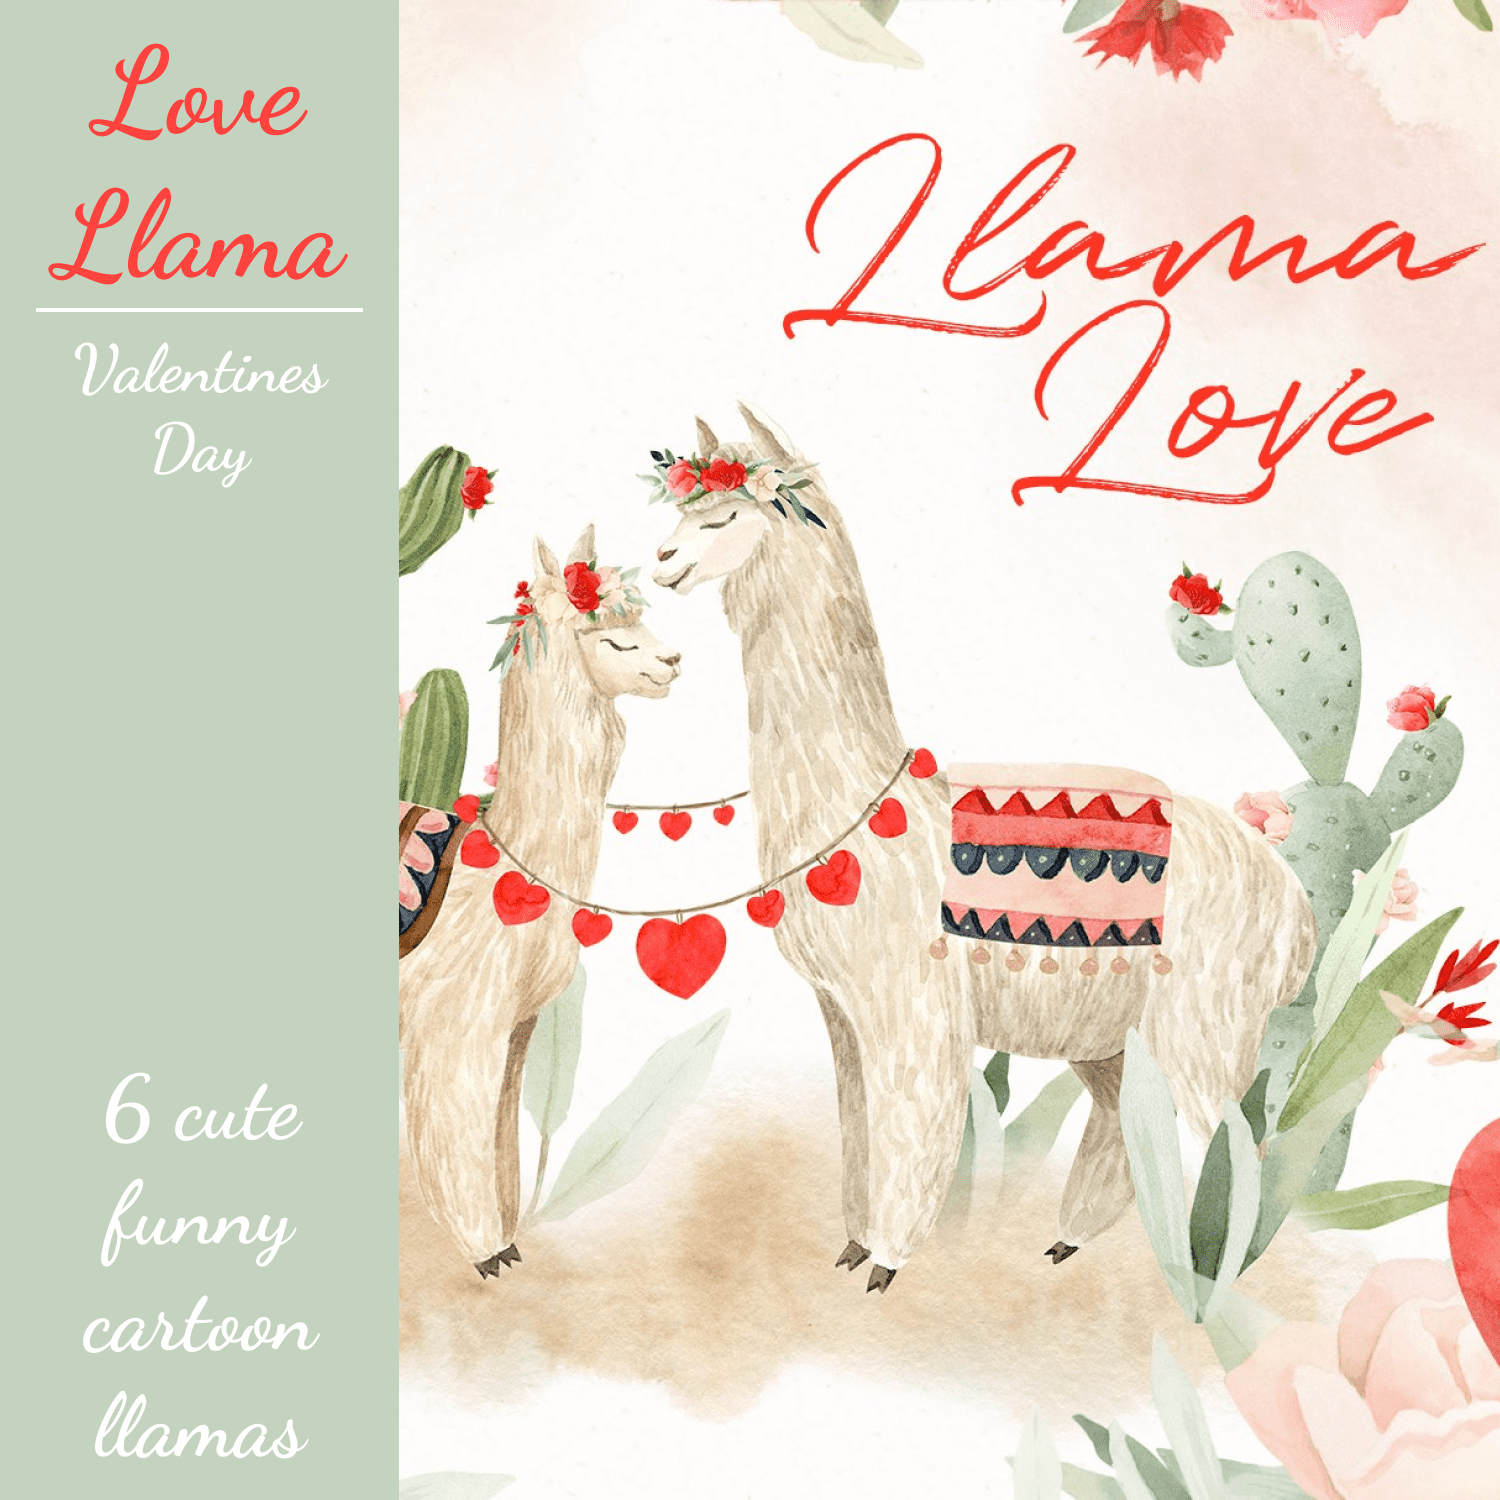 Love Llama - Valentines Day.